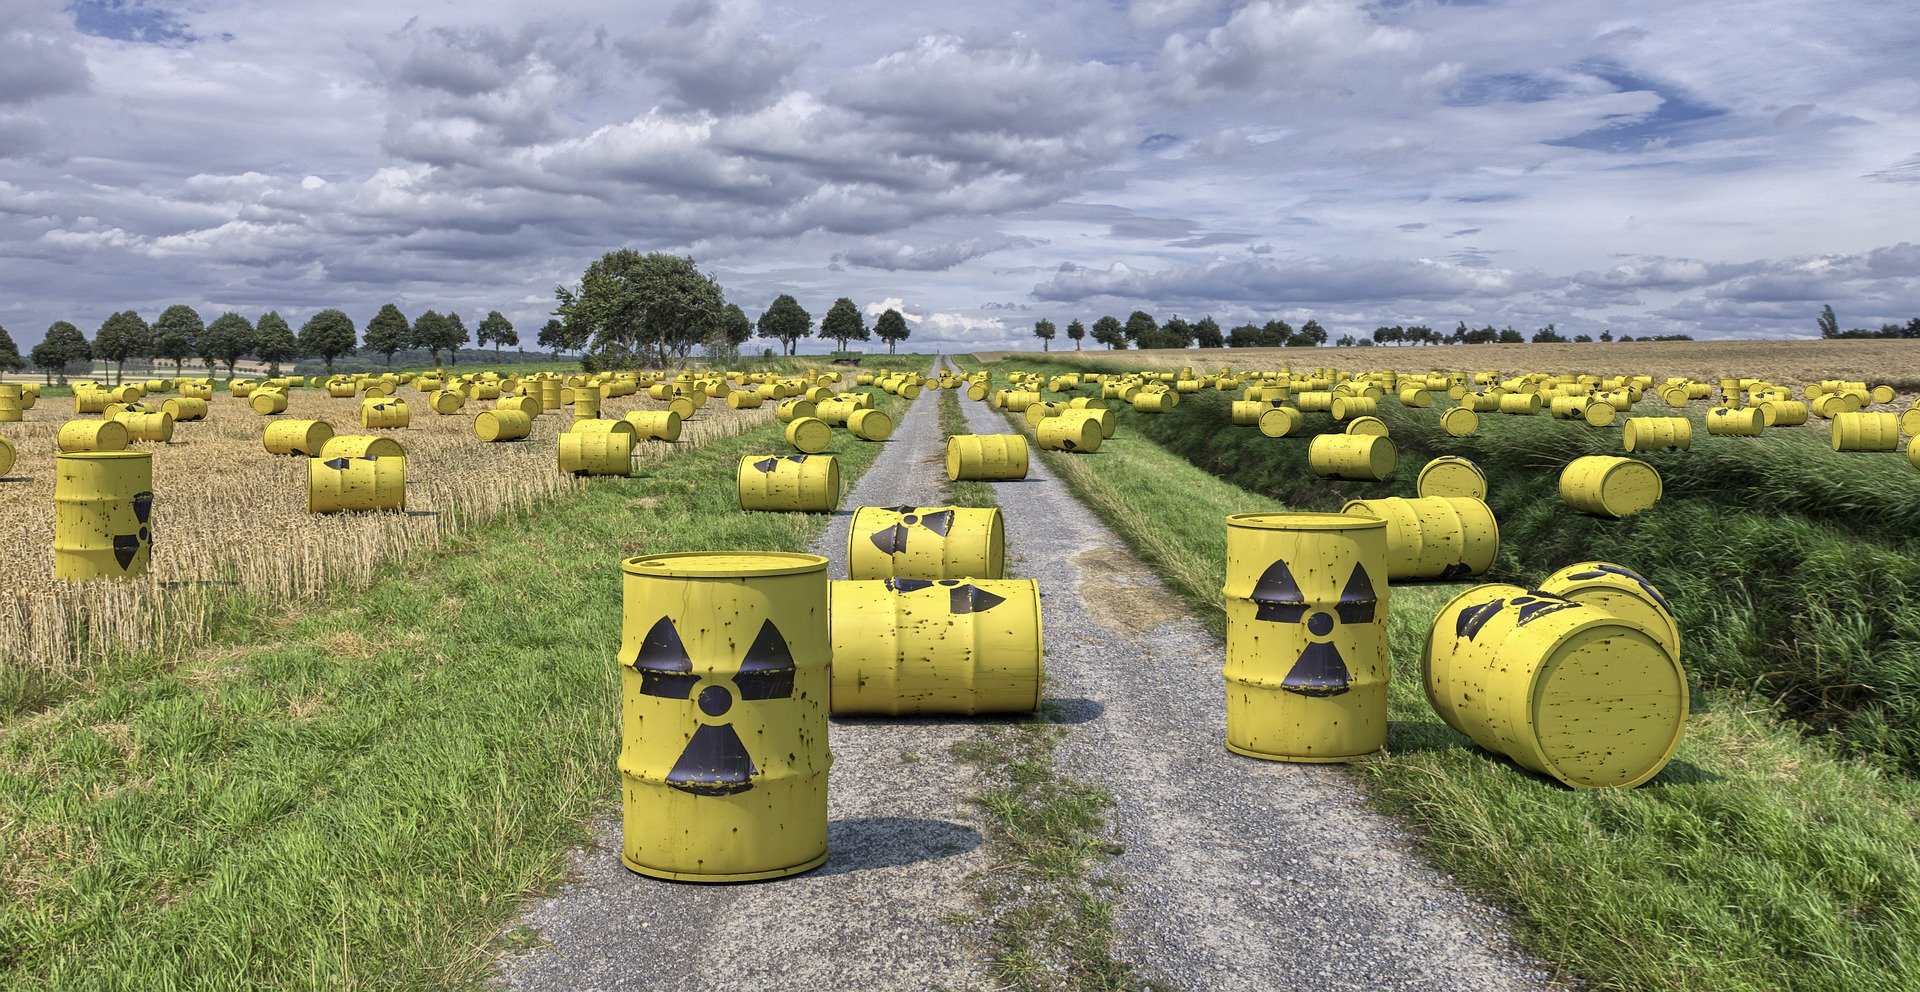 nuclear-waste-1471361_1920.jpg